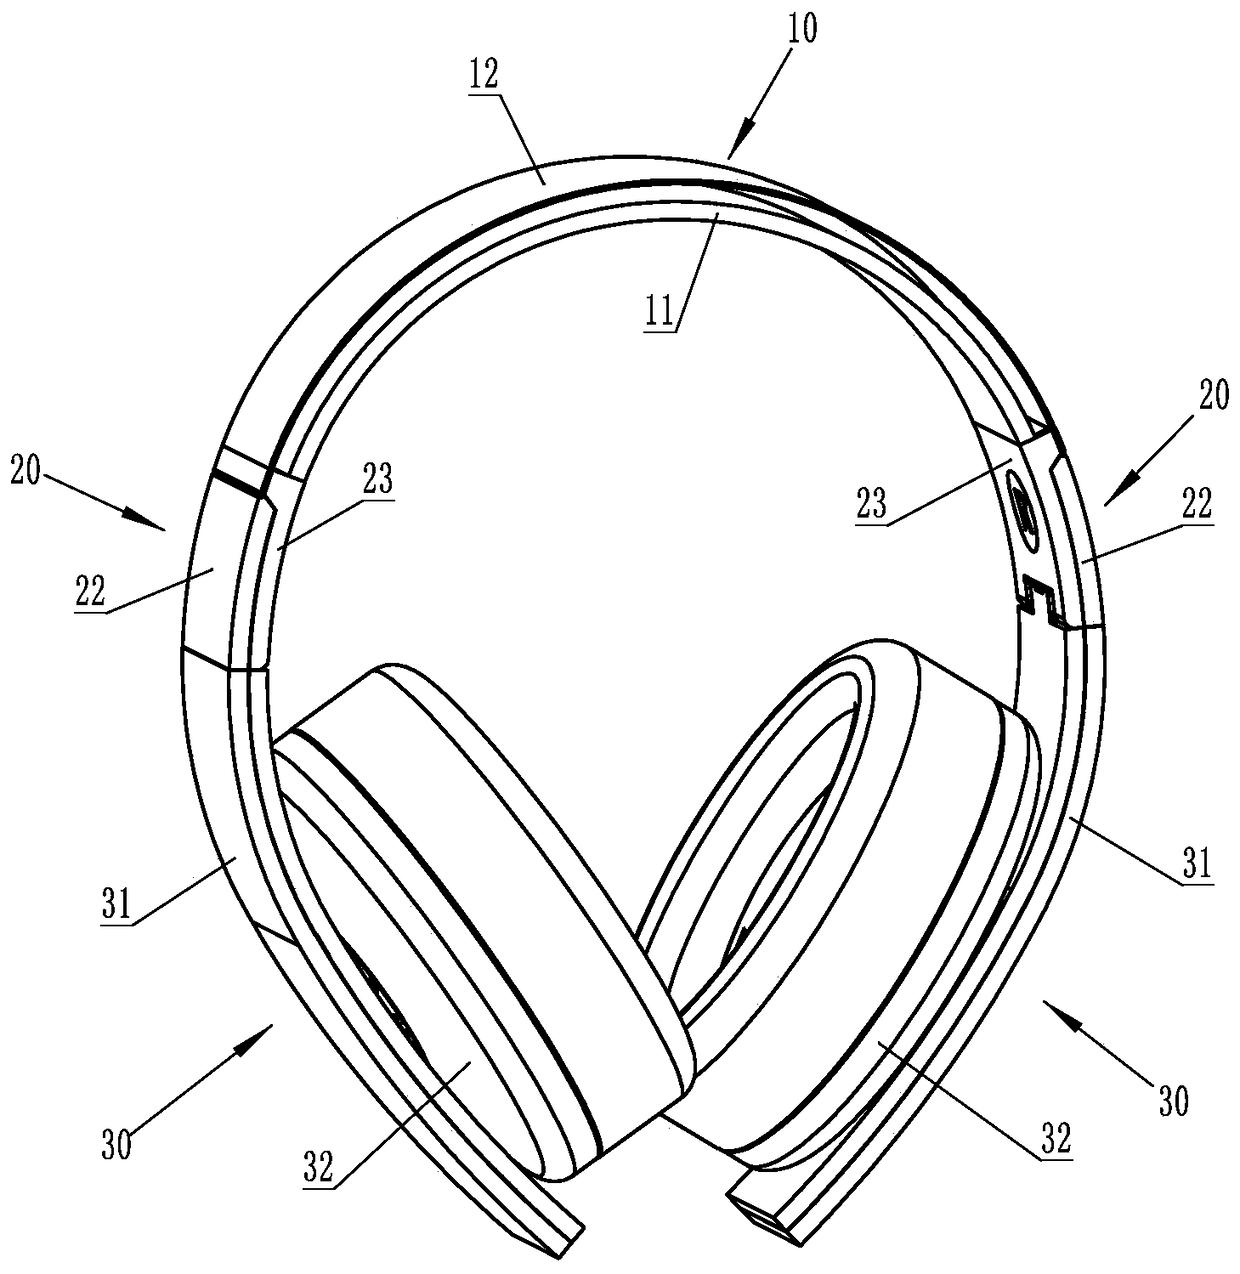 A foldable headset